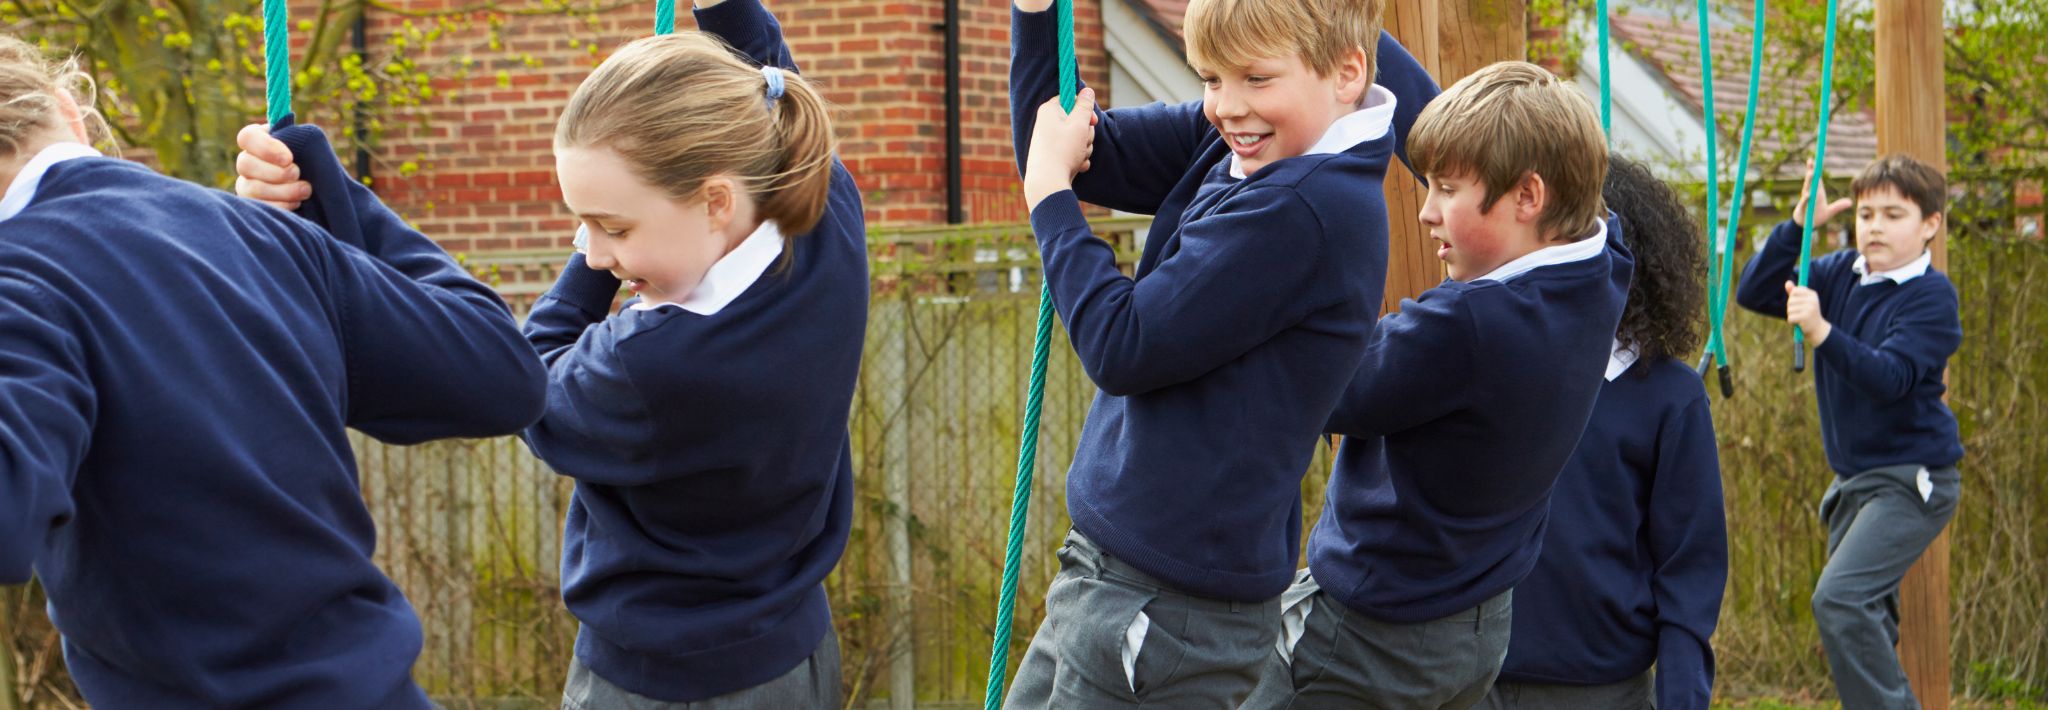 children on a school playground GBH Law case study